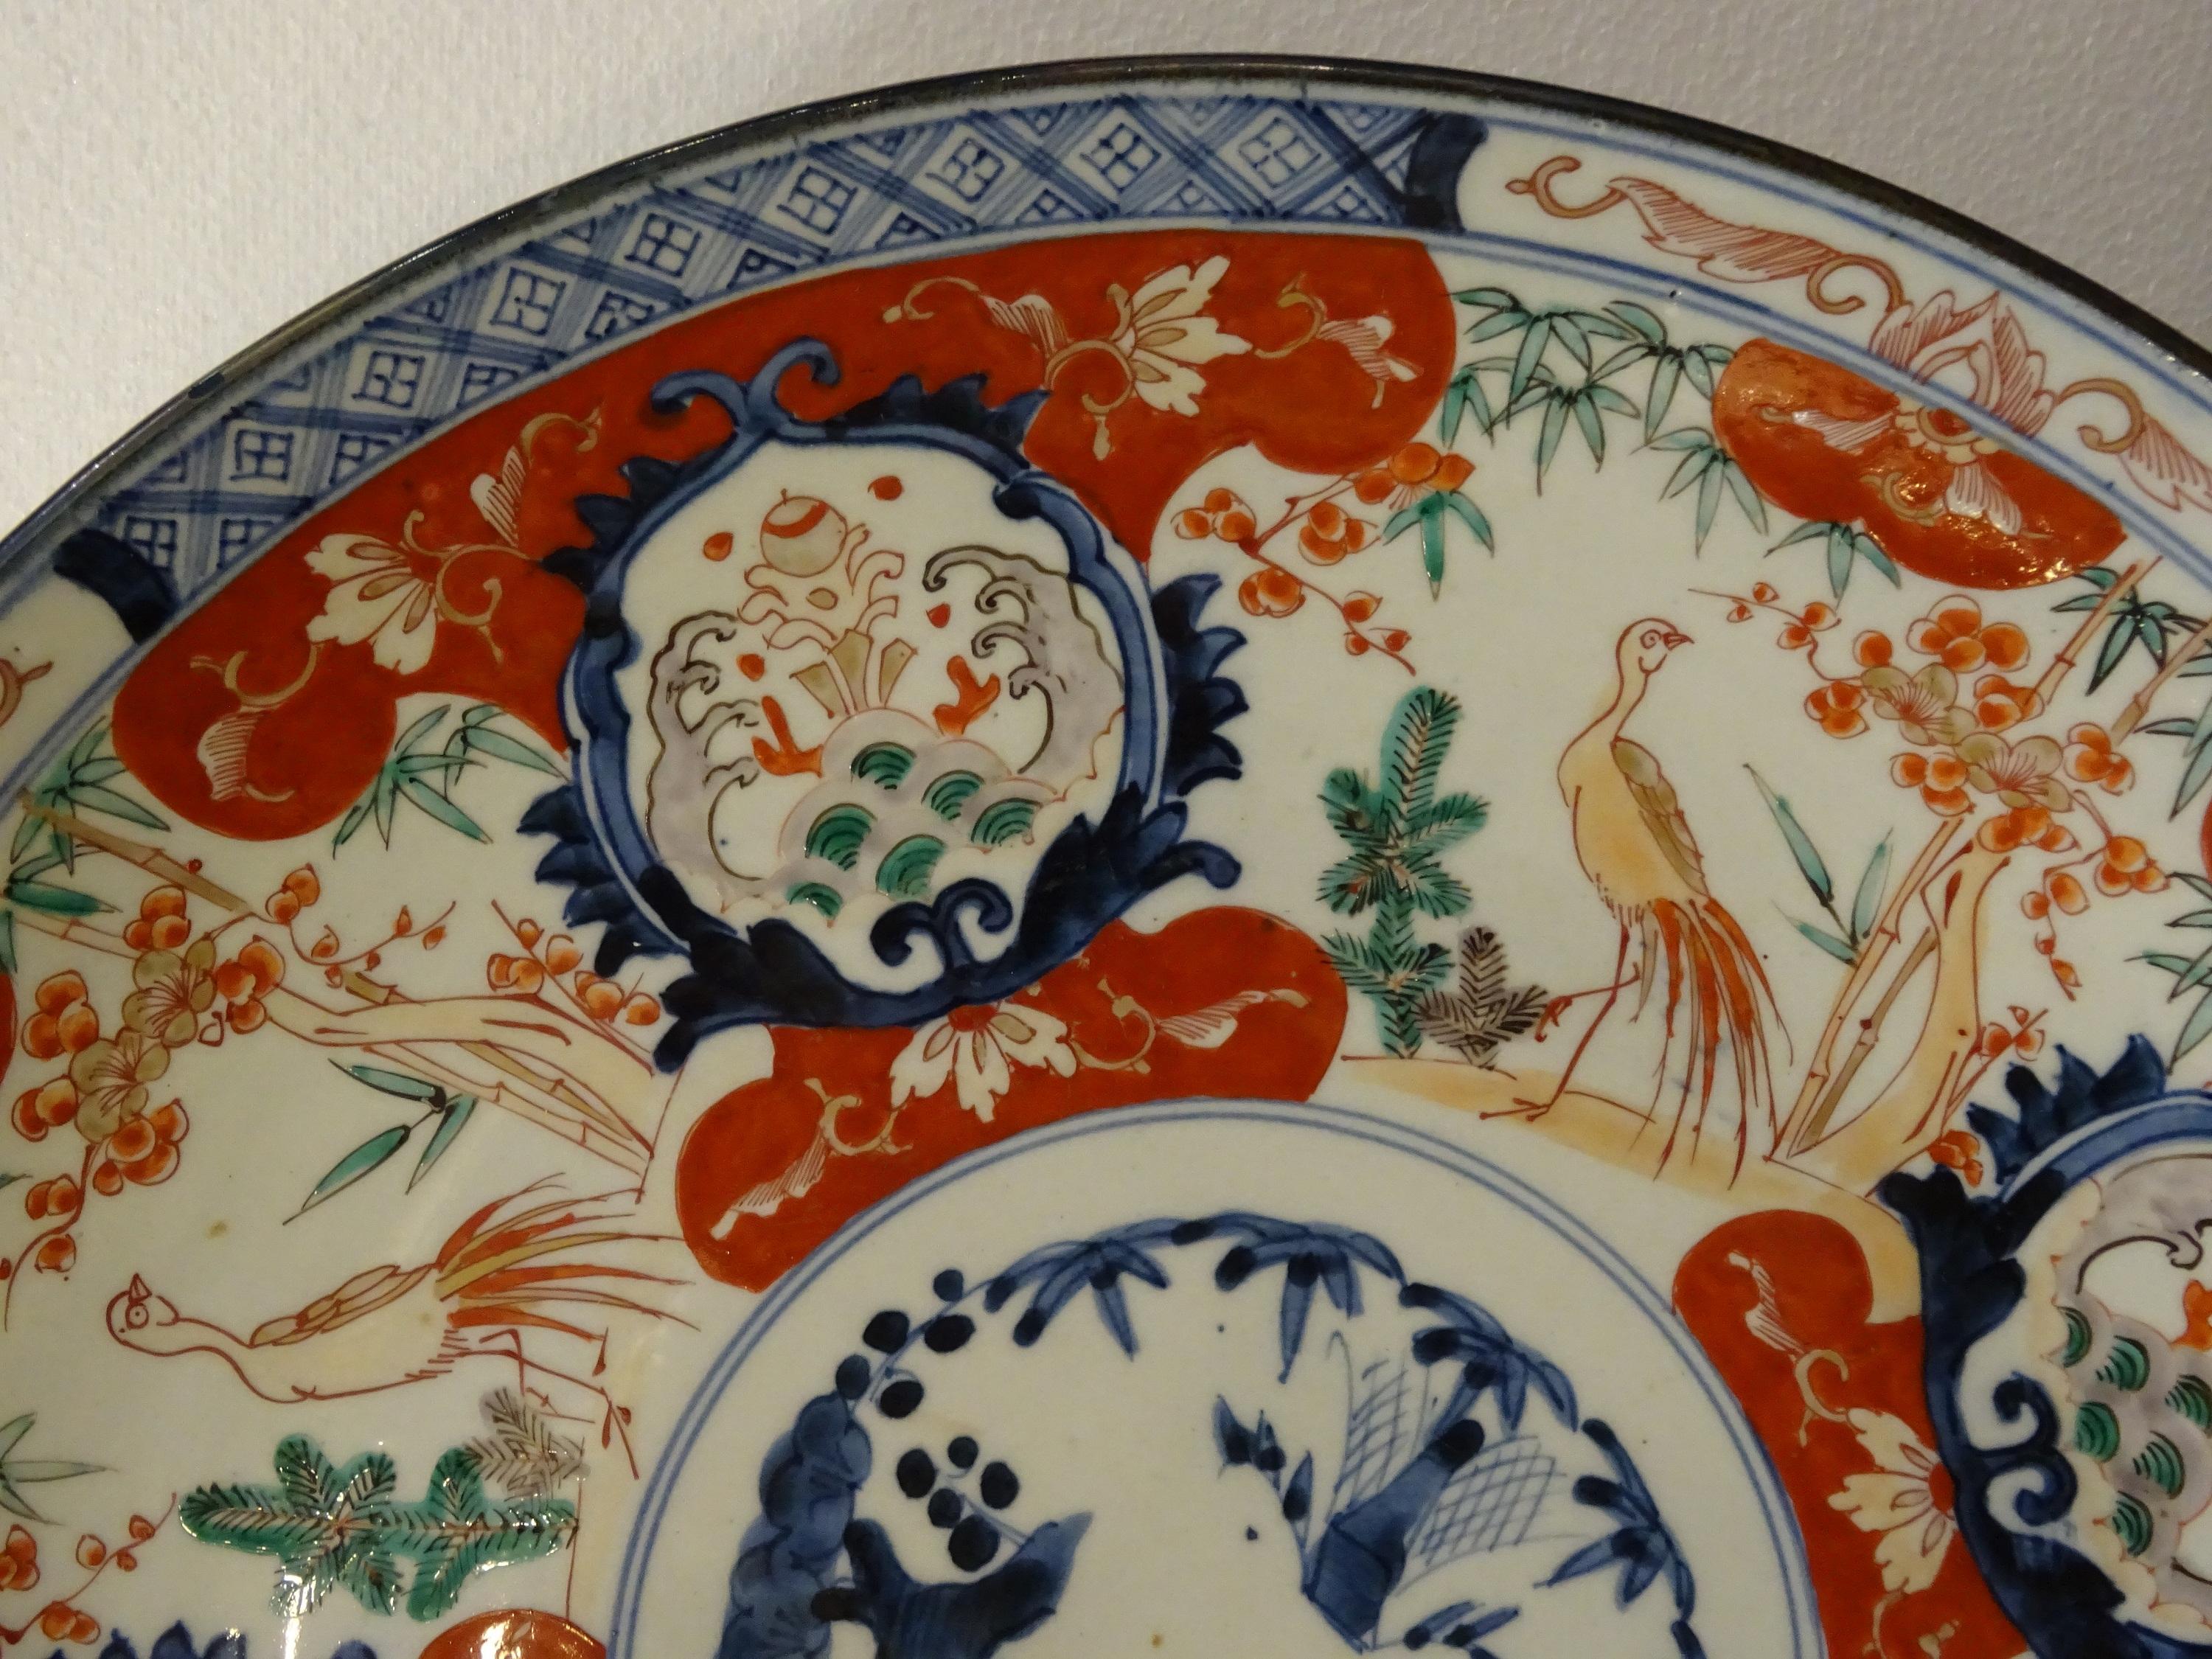 Japanese Imari 19th Century Japan Large Red Blue and White Porcelain Plate, circa 1860